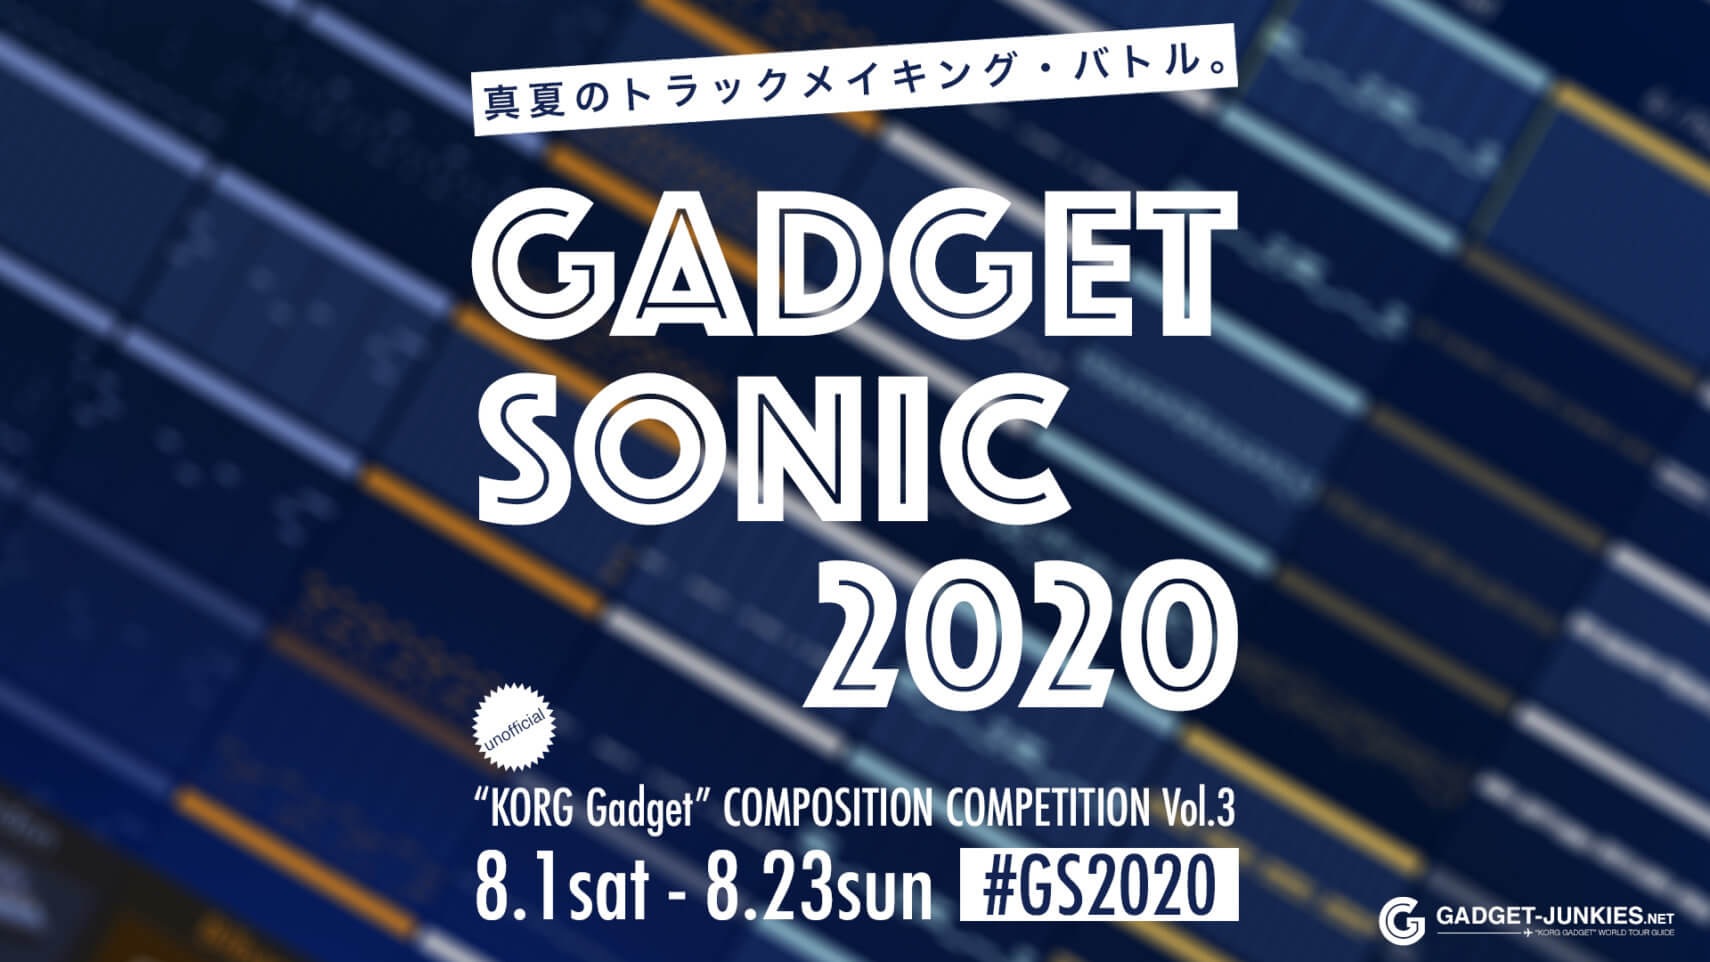 Gadget Sonic 2020